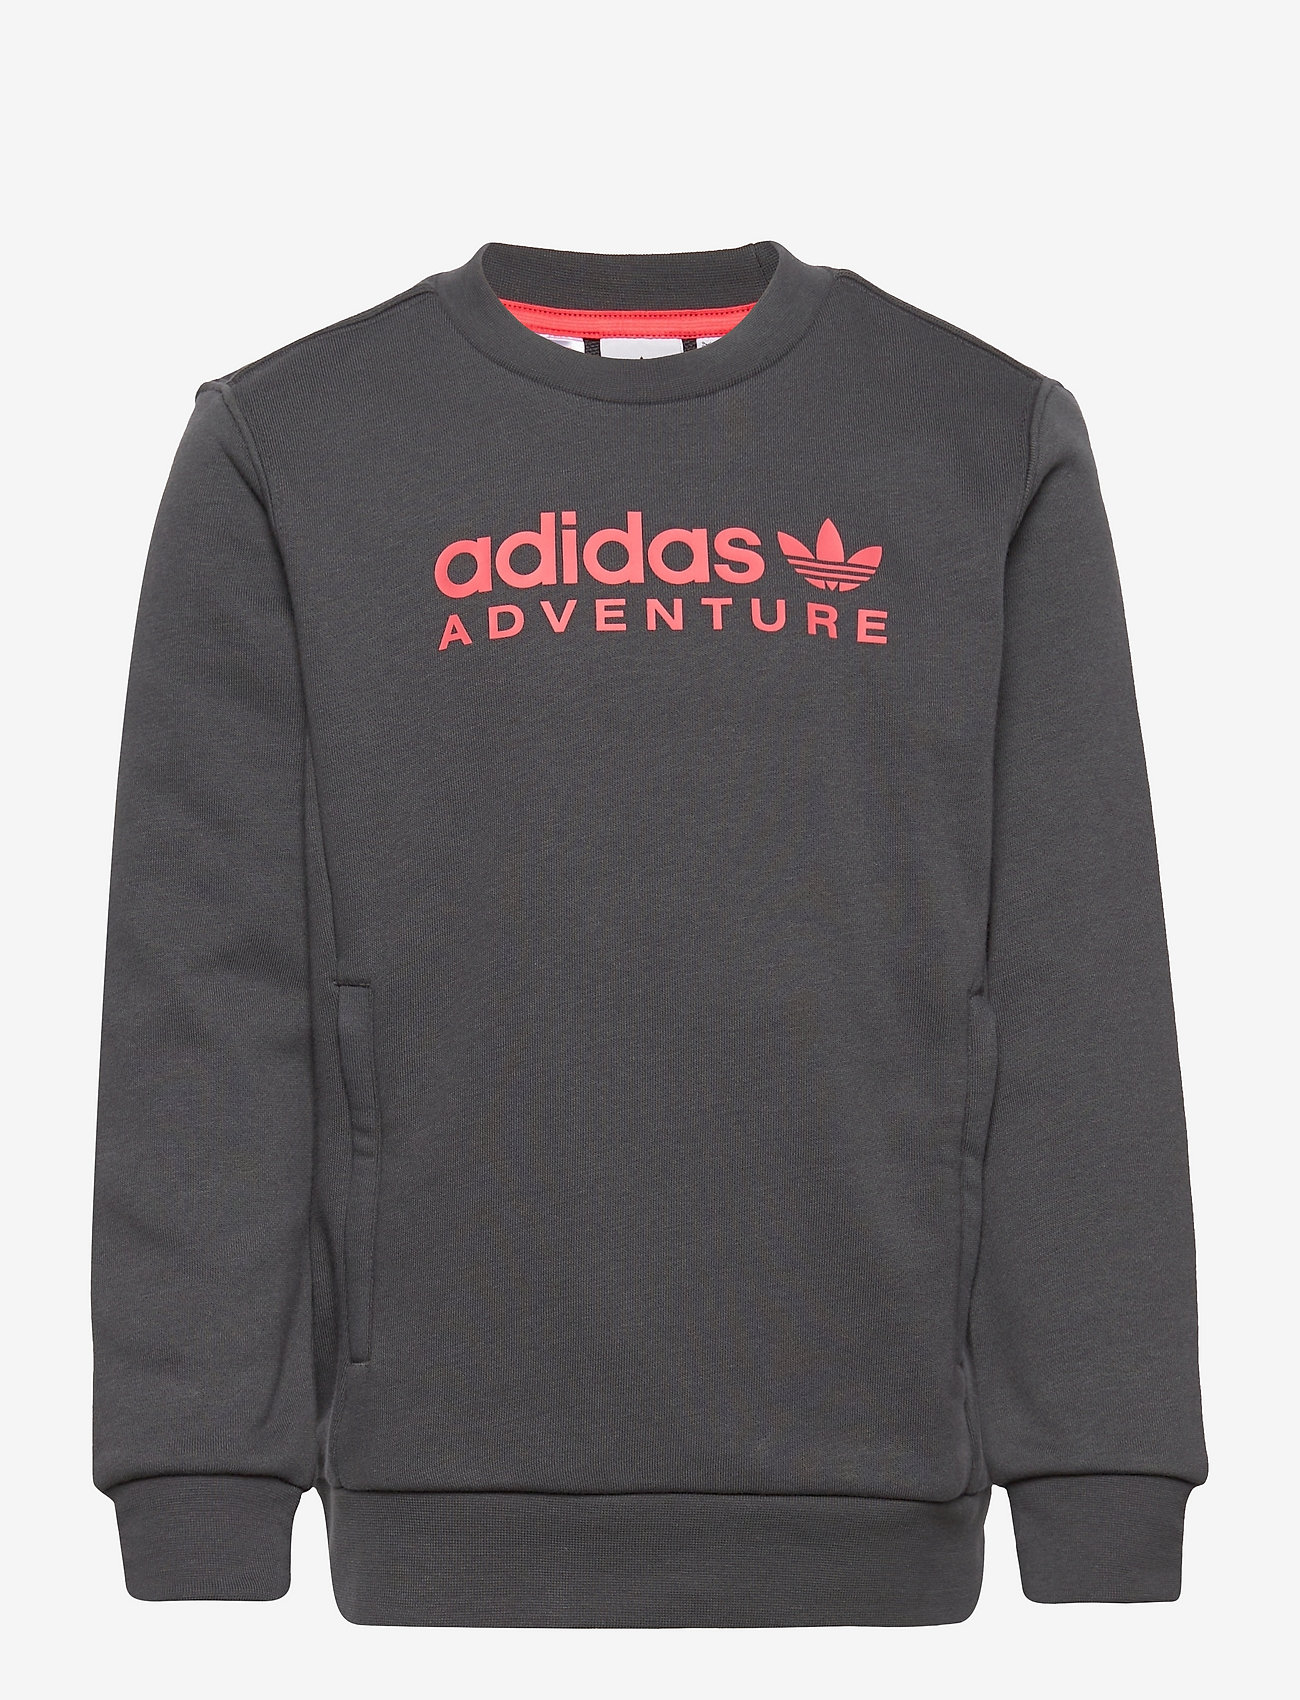 adidas Originals Adventure Crew Sweatshirt - Tops | Boozt.com